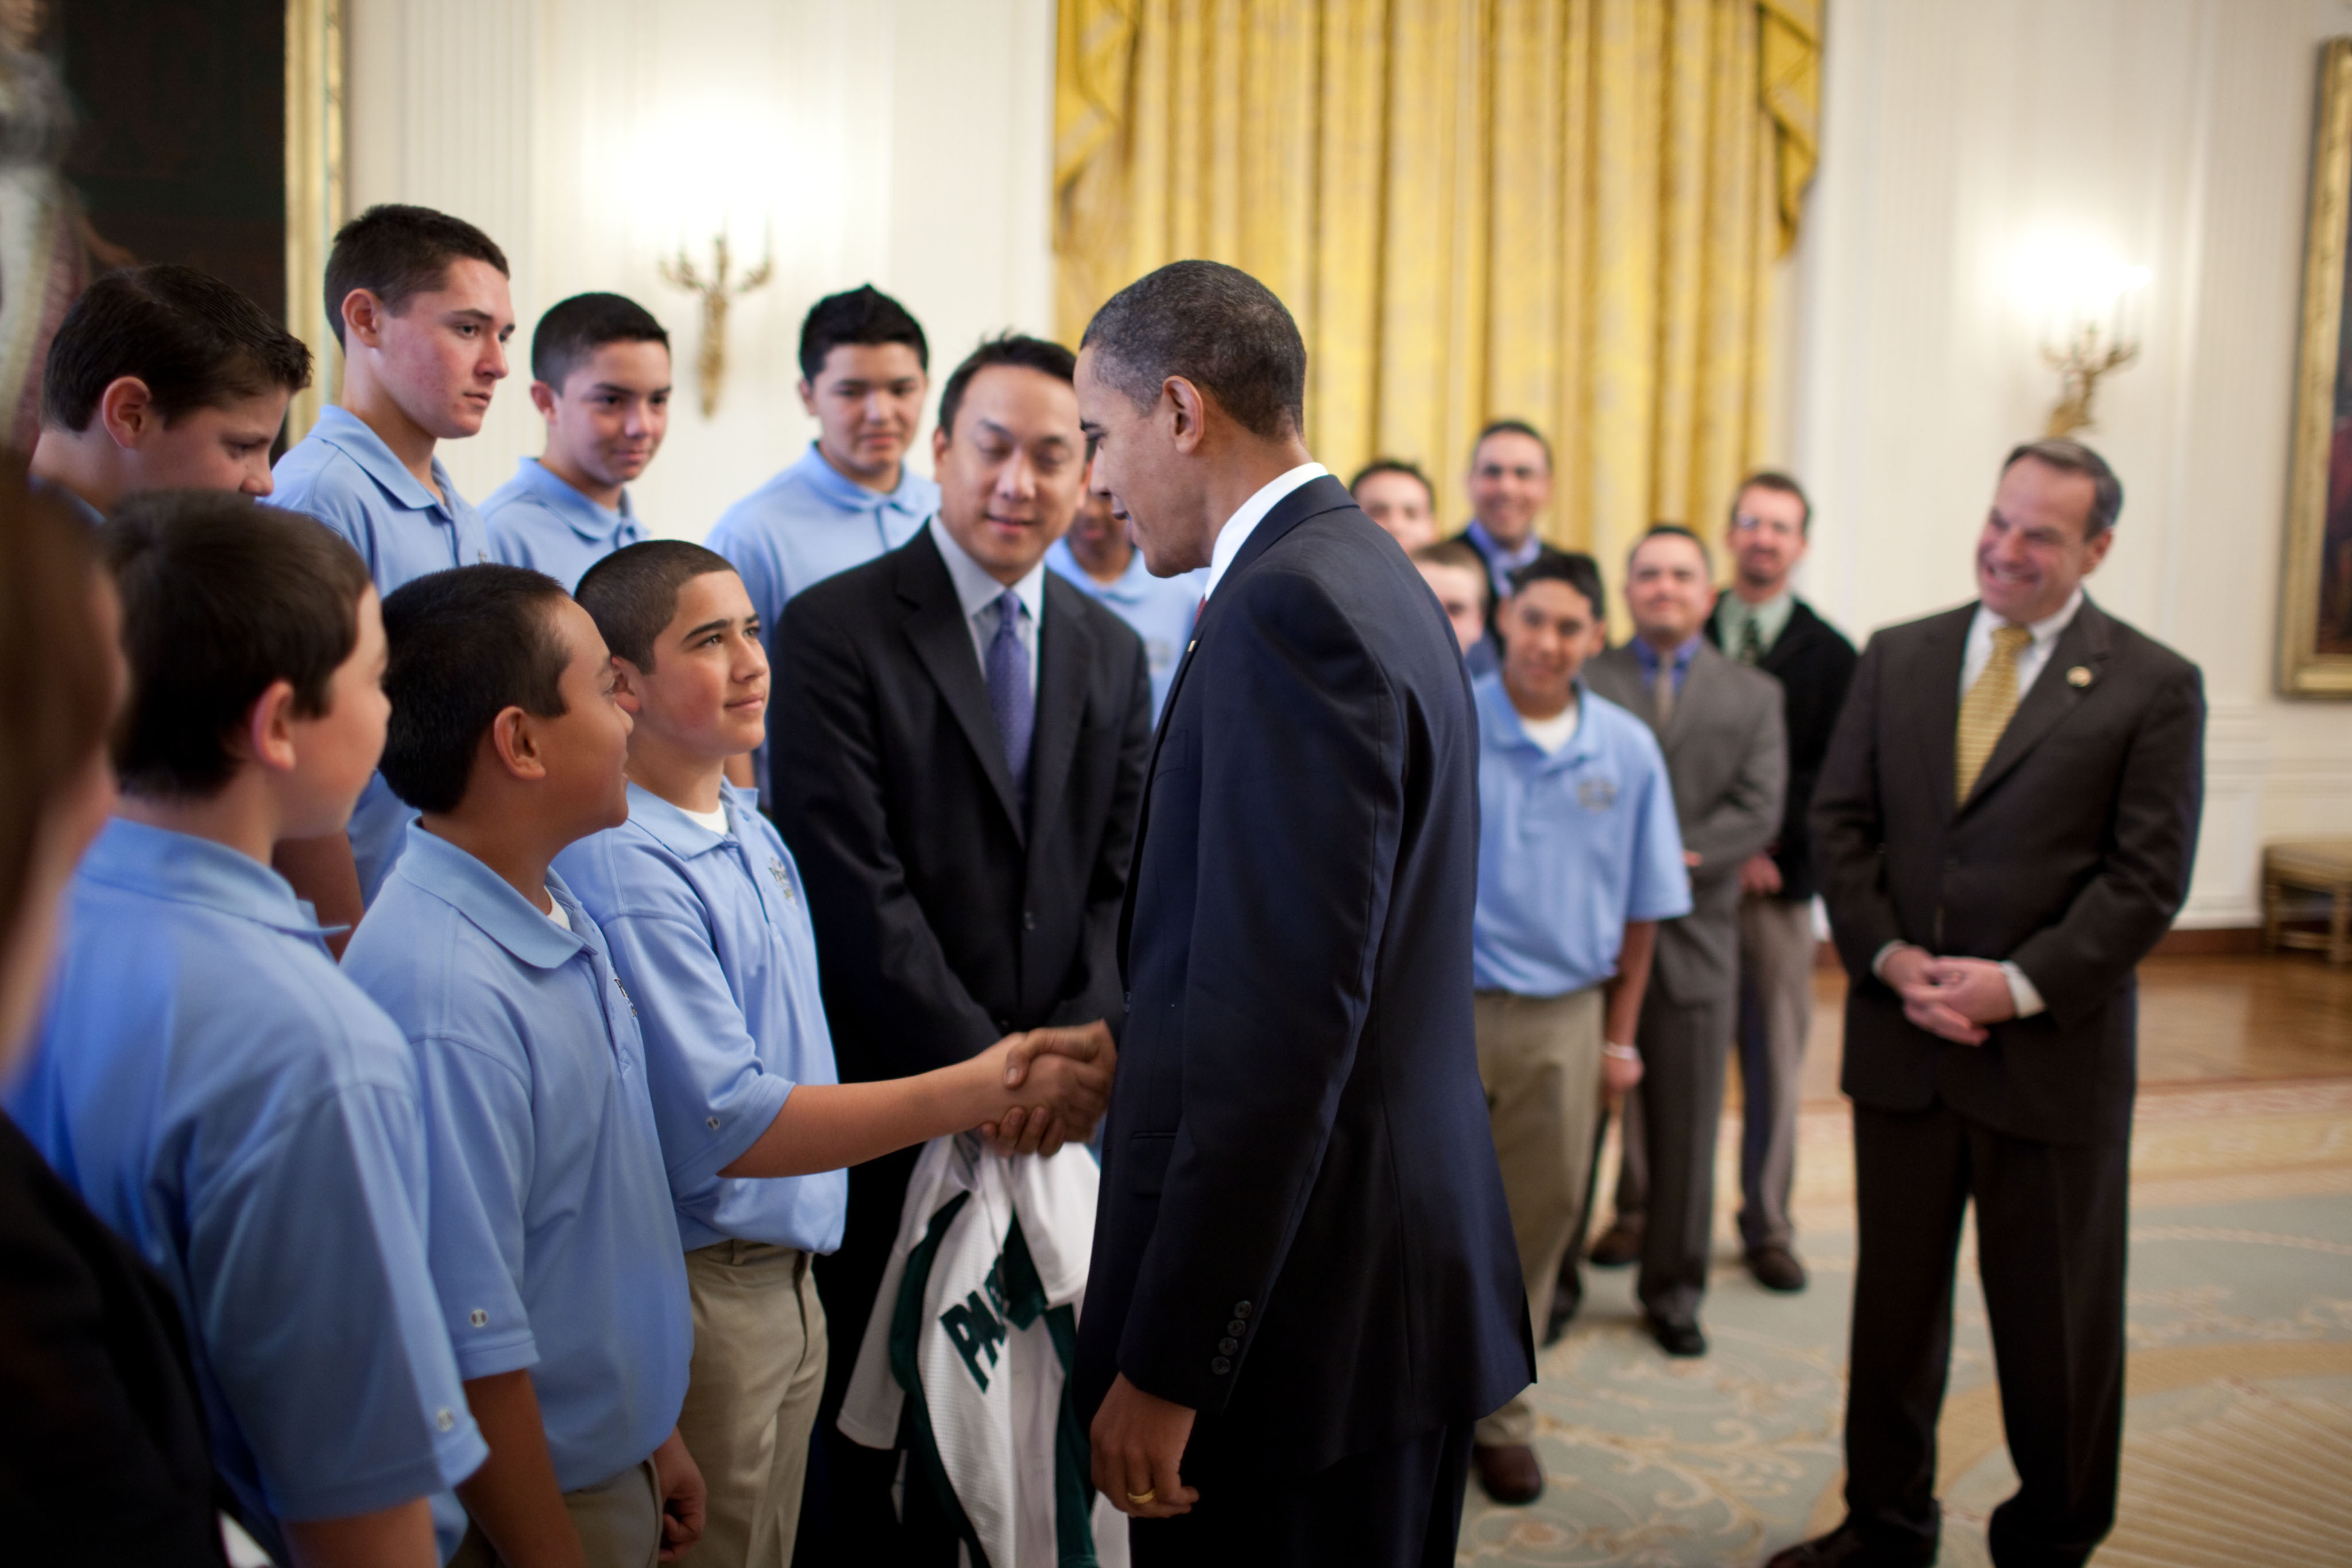 The President Meets the Park View Little League Team